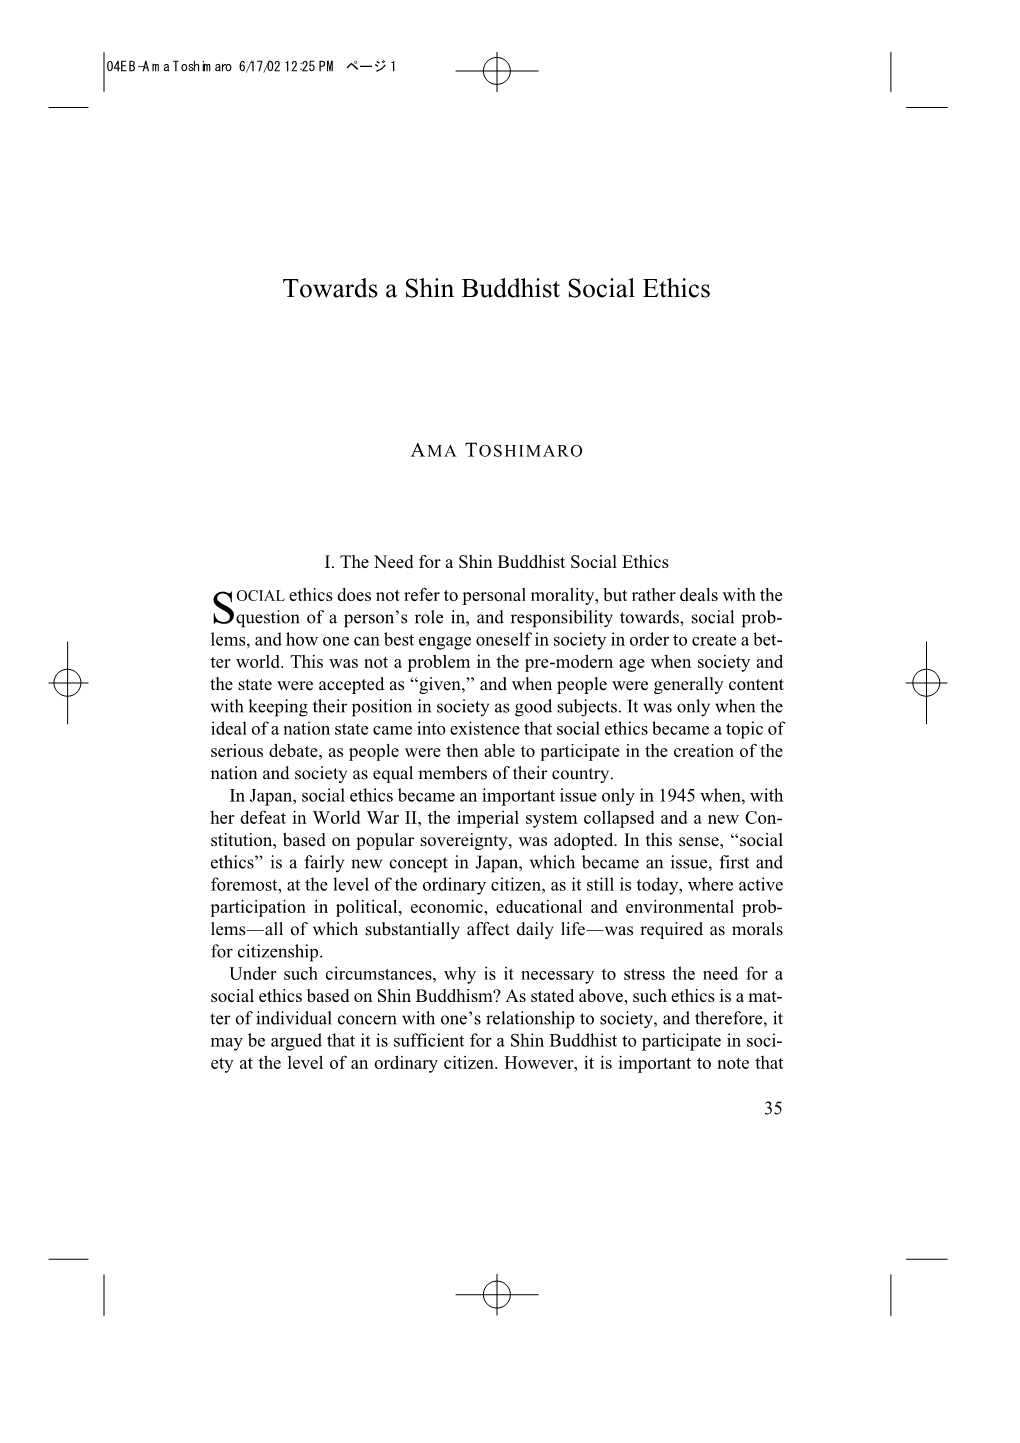 Towards a Shin Buddhist Social Ethics